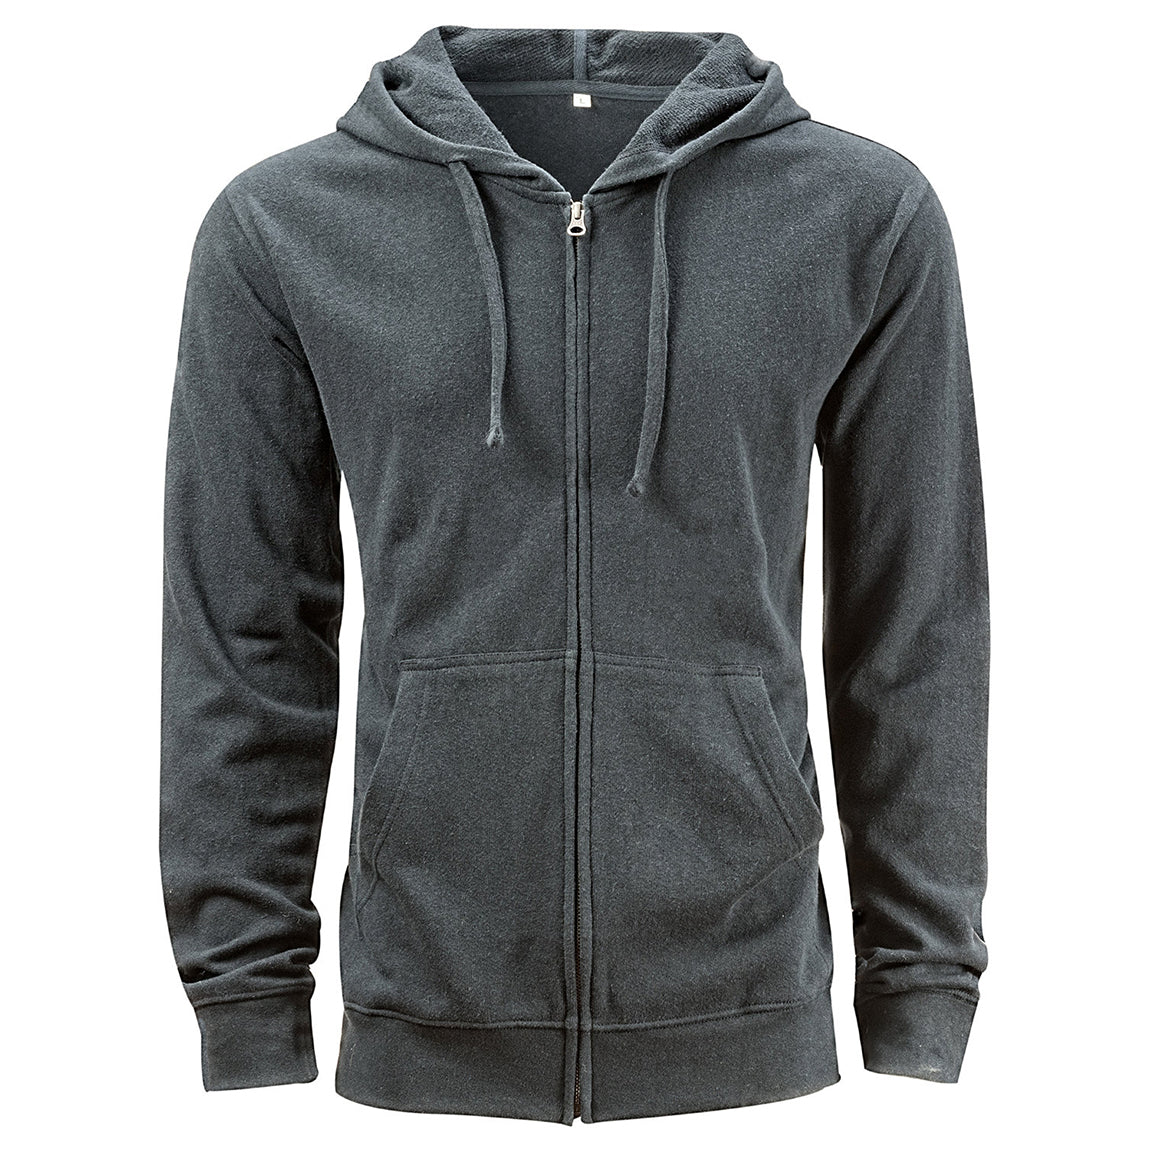 econscious Unisex Hemp Hero Full-Zip hooded Sweatshirt